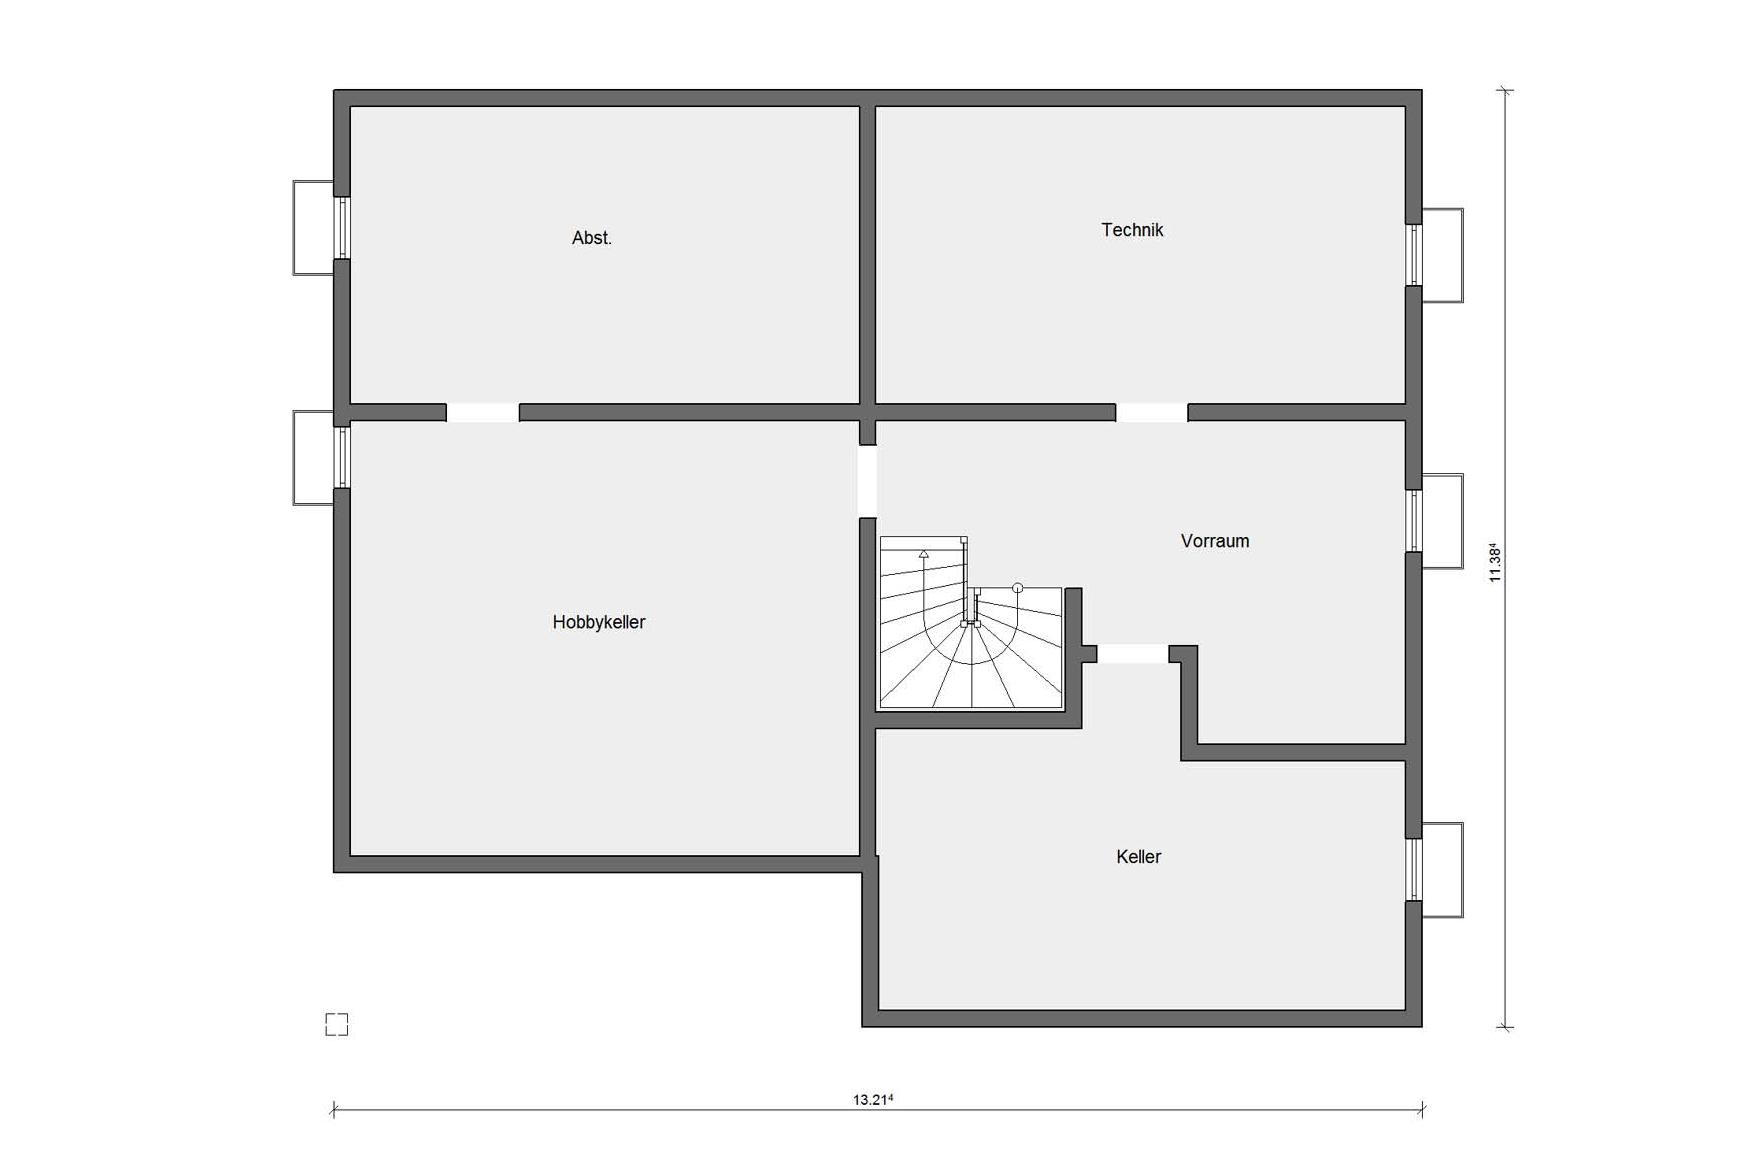 Floor plan basement flat roof bungalow E 10-119.2